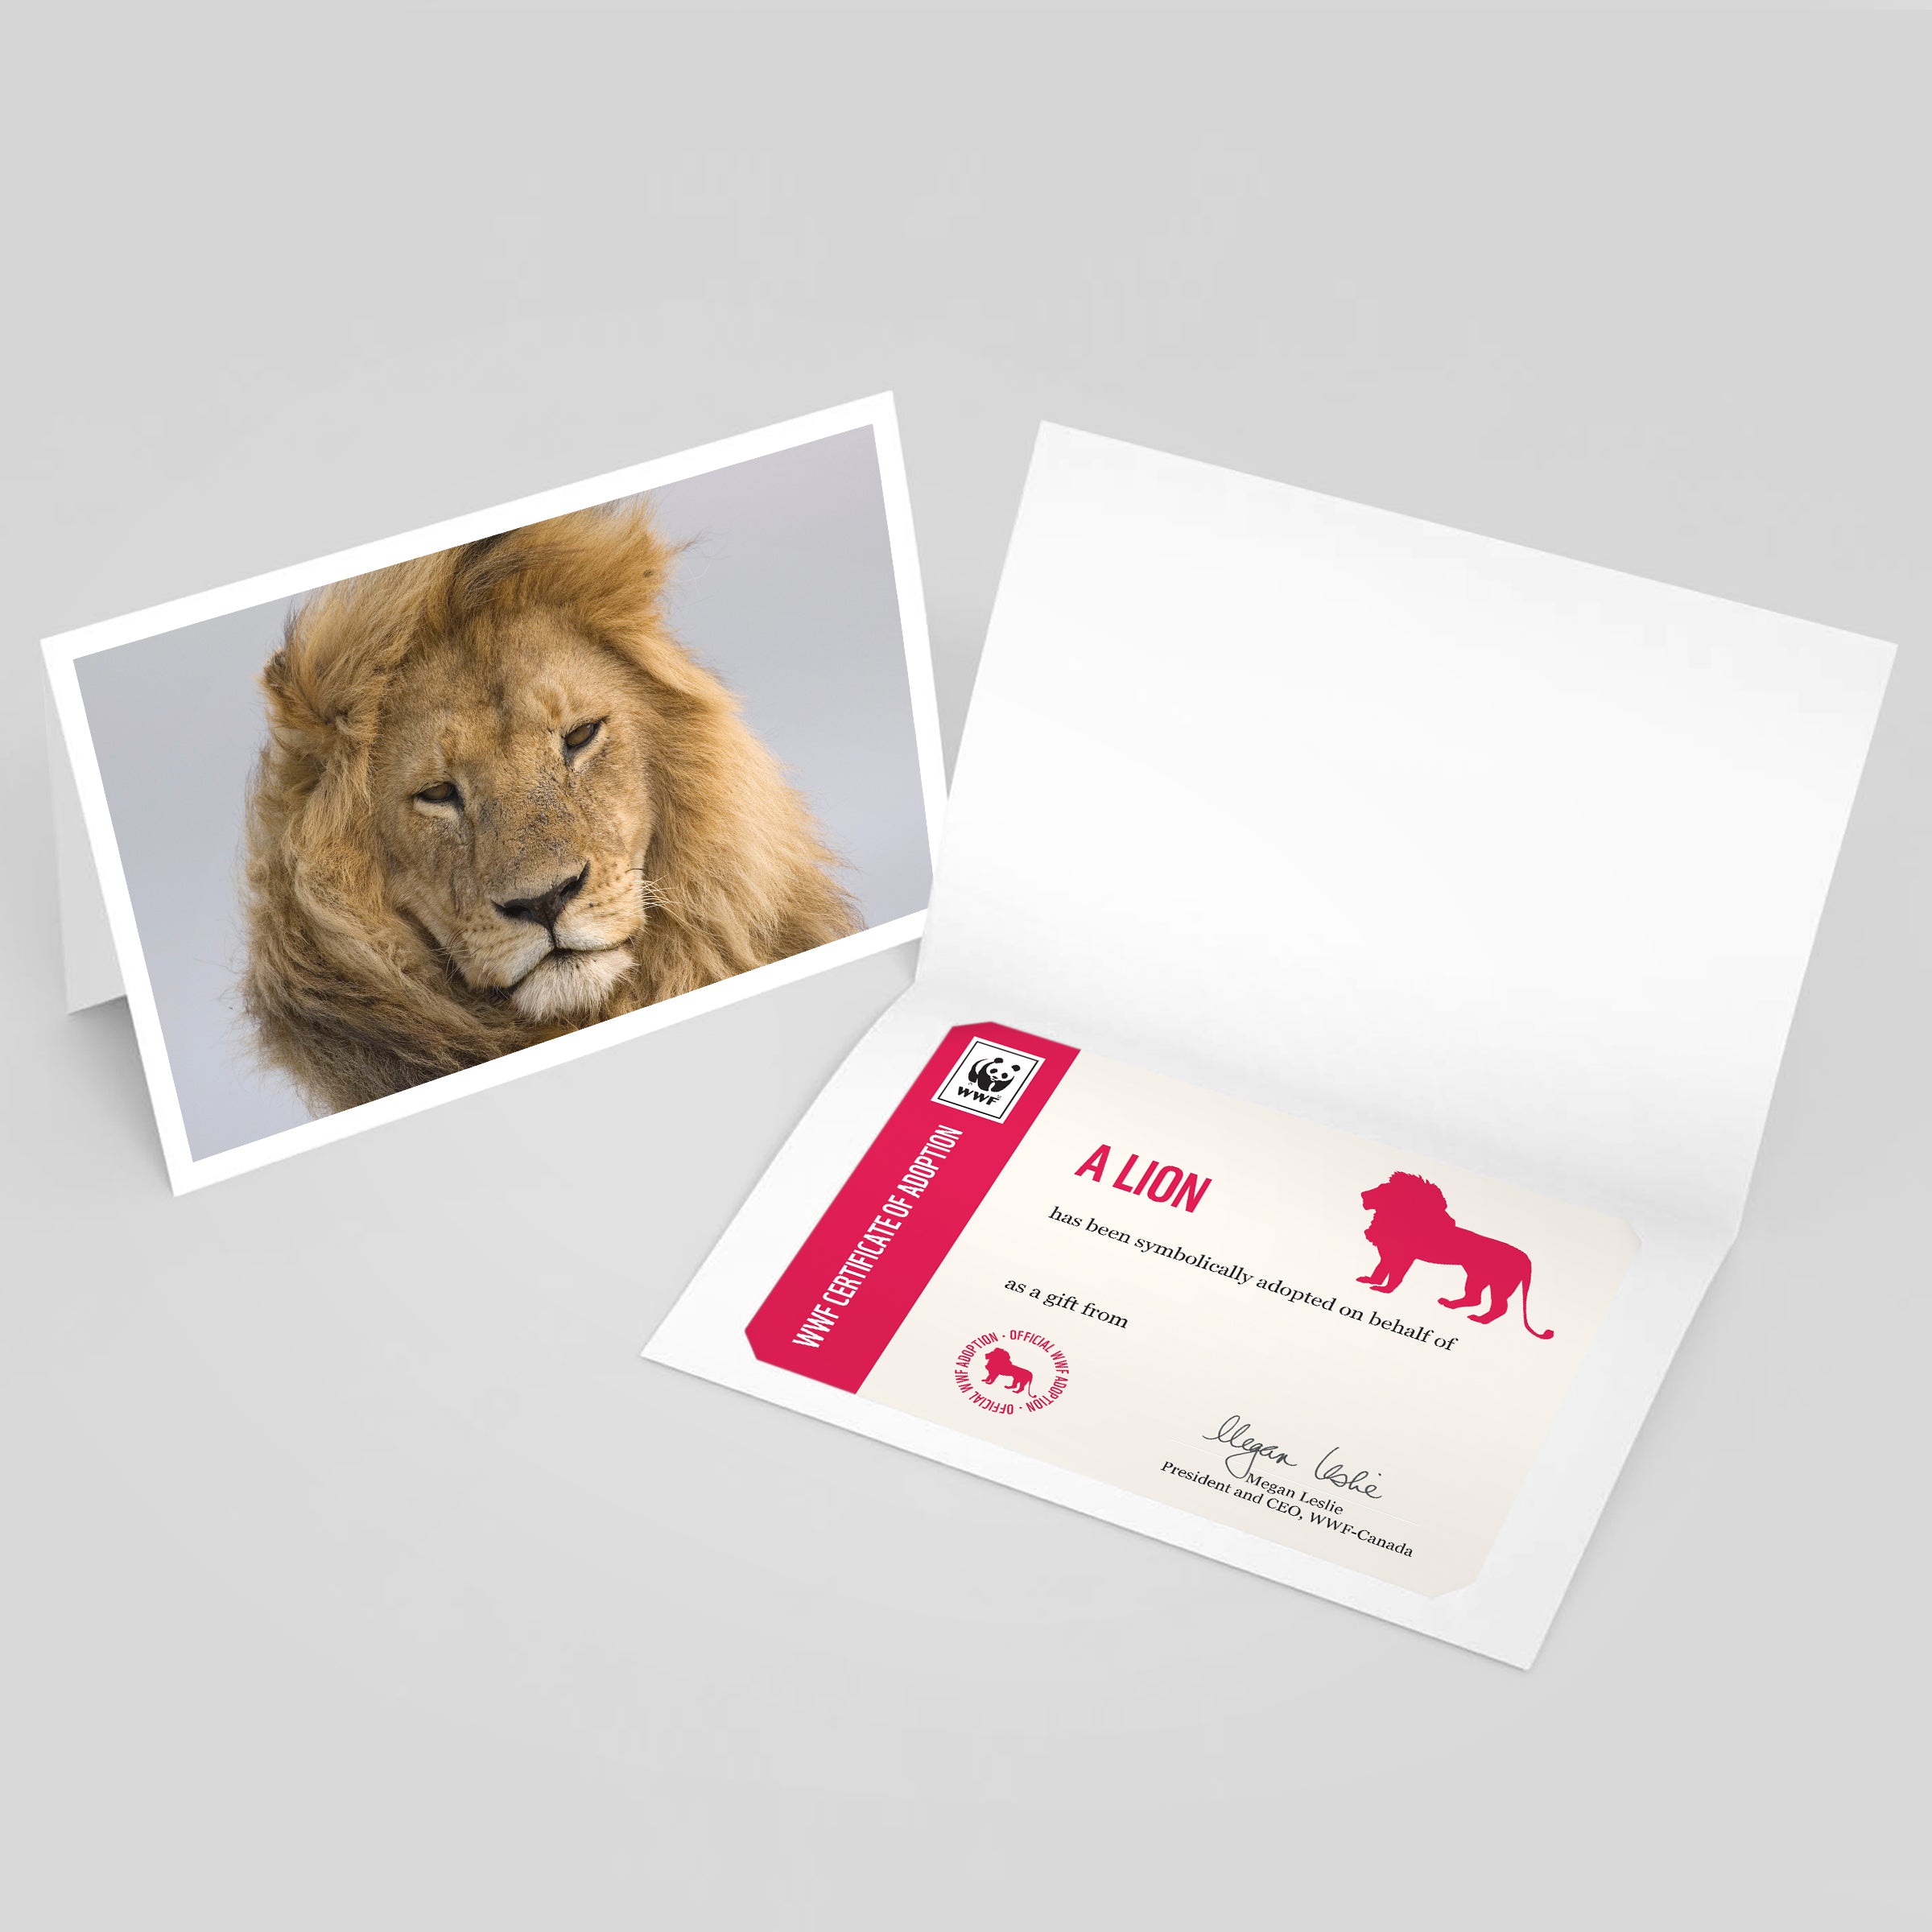 Lion adoption card - WWF-Canada